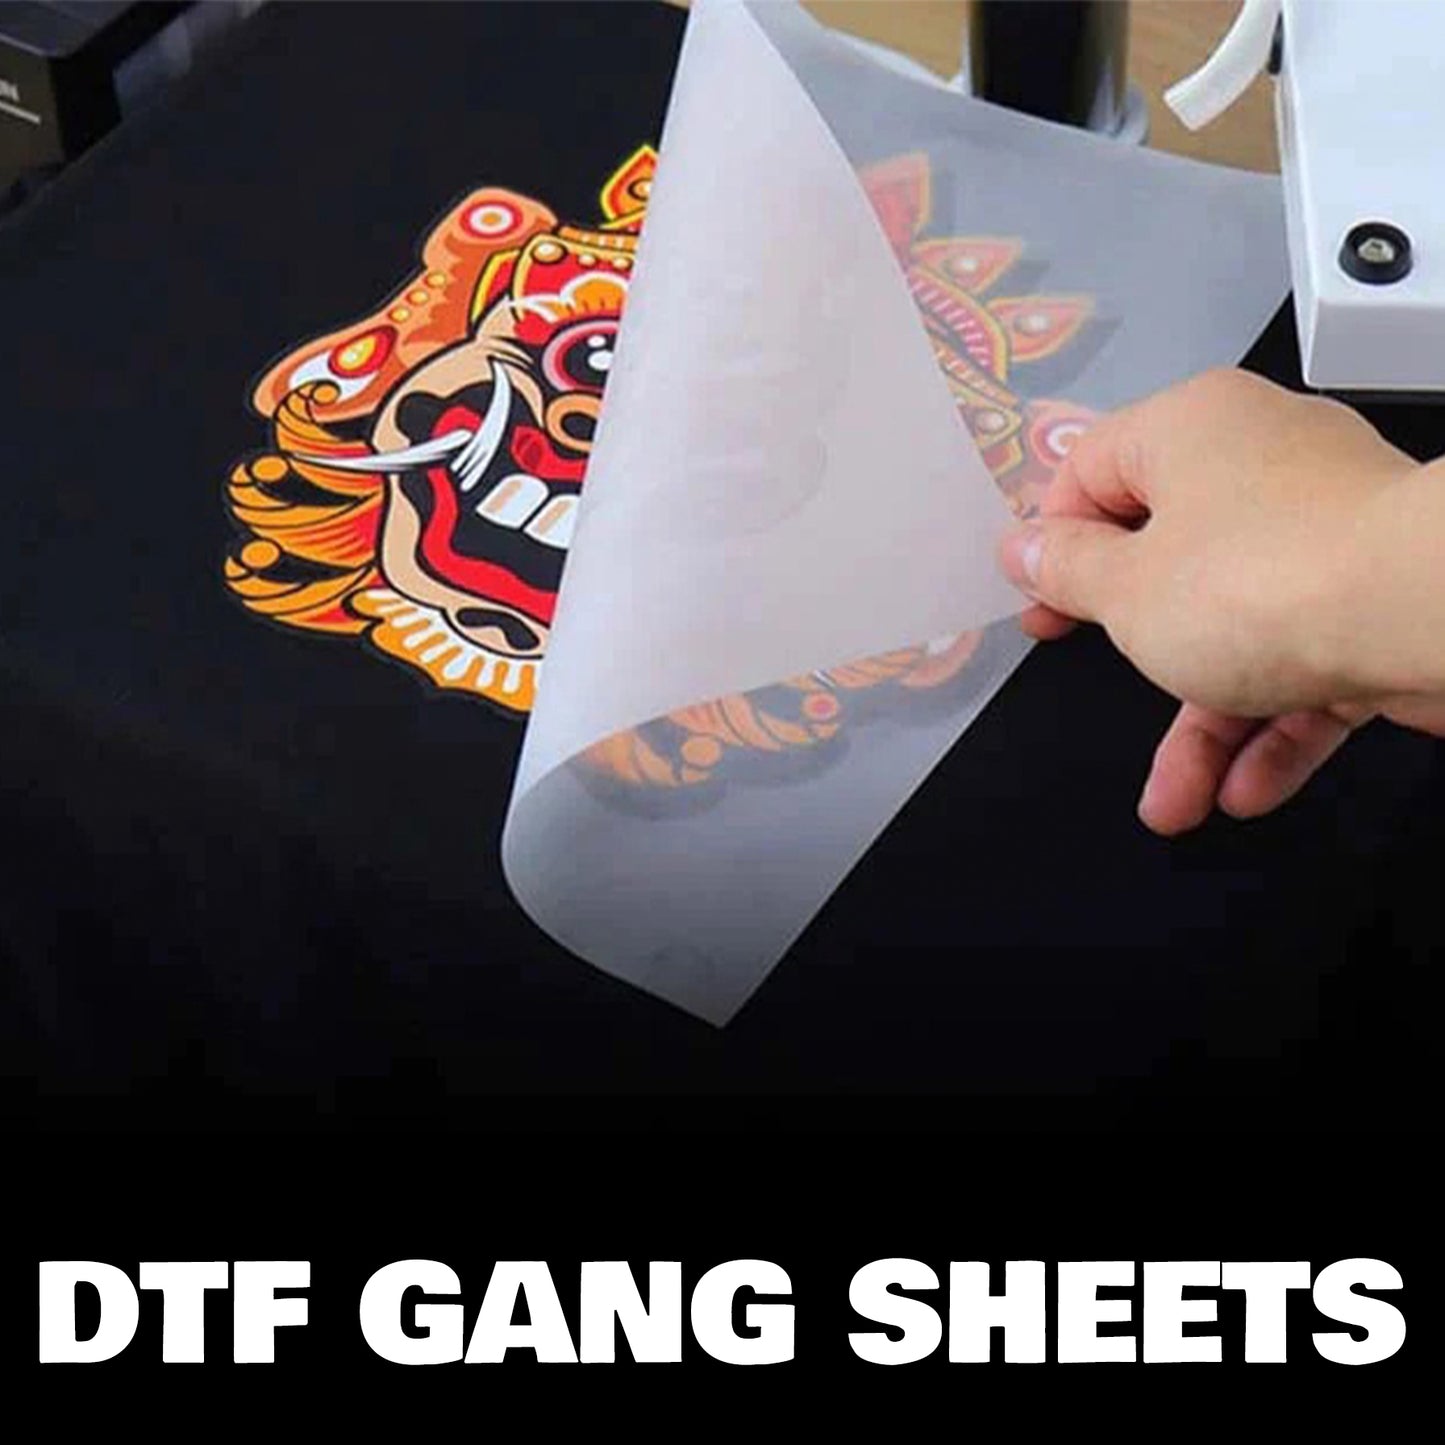 DTF Gang Transfer Sheets - Multiple Sizes